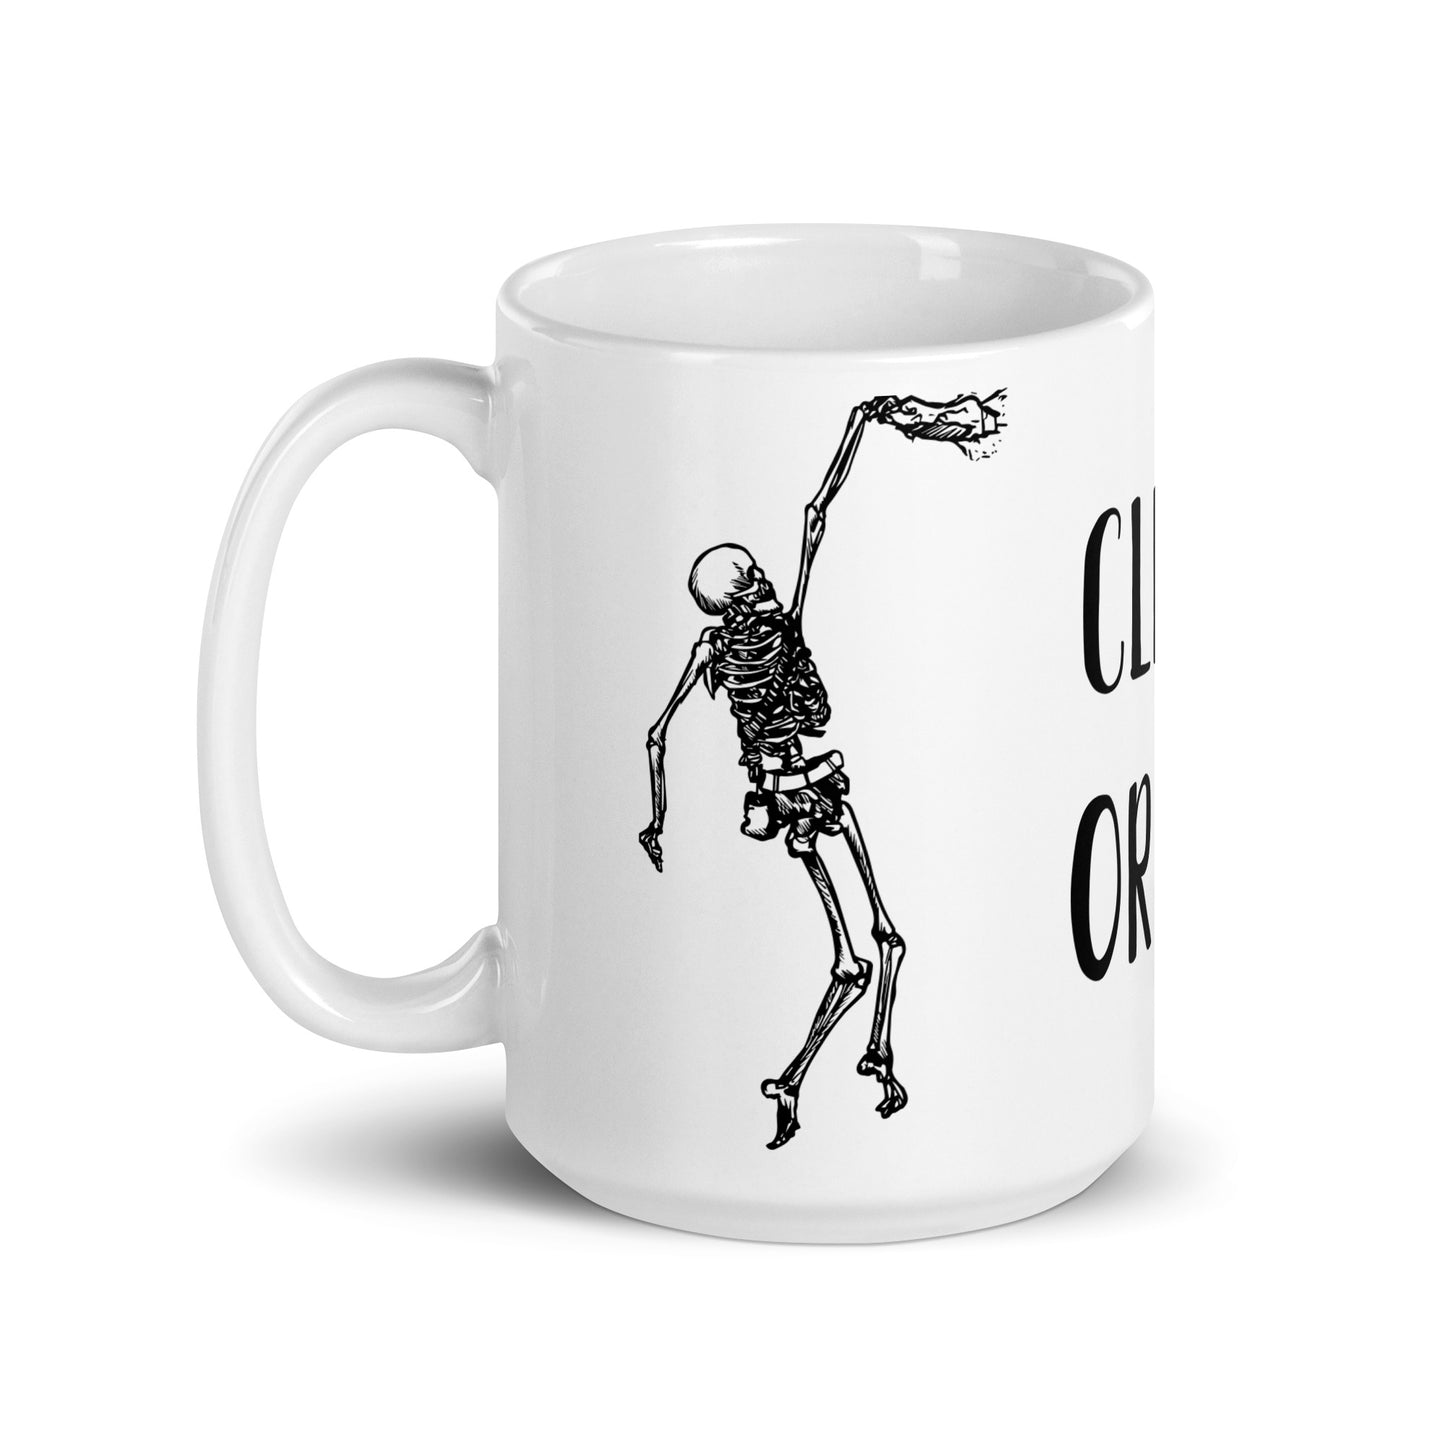 BellavanceInk: Coffee Mug With Pen & Ink Drawing Of A Skeleton Free Rock Climbing